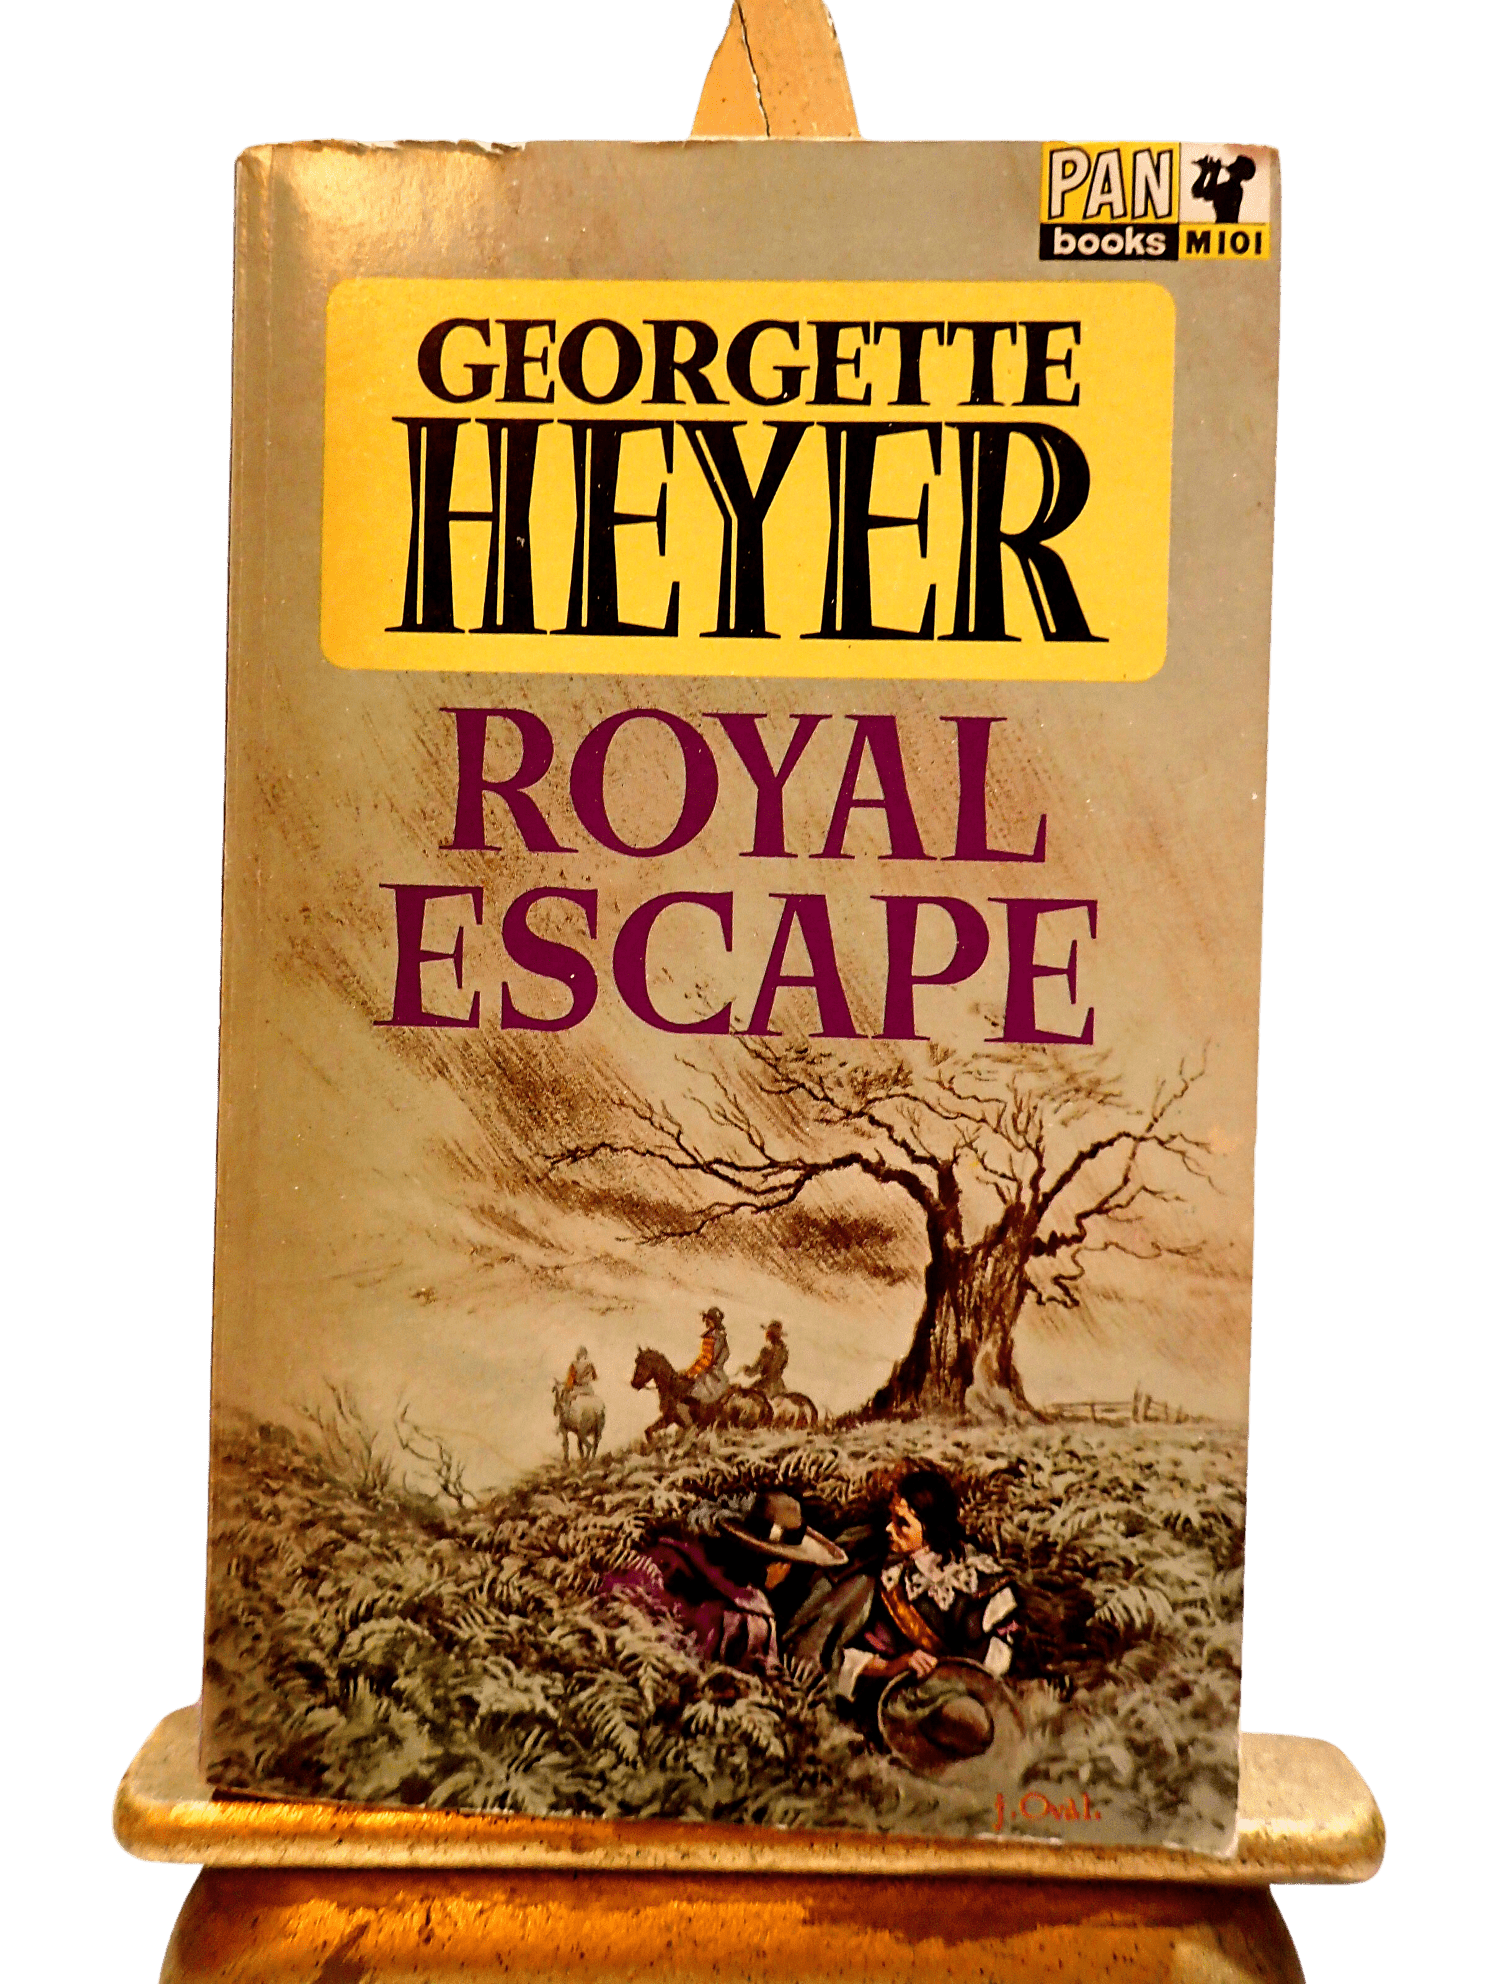 Men in Cavalier dress hiding on Front Cover of Royal Escape Georgette Heyer Vintage Pan 1960's